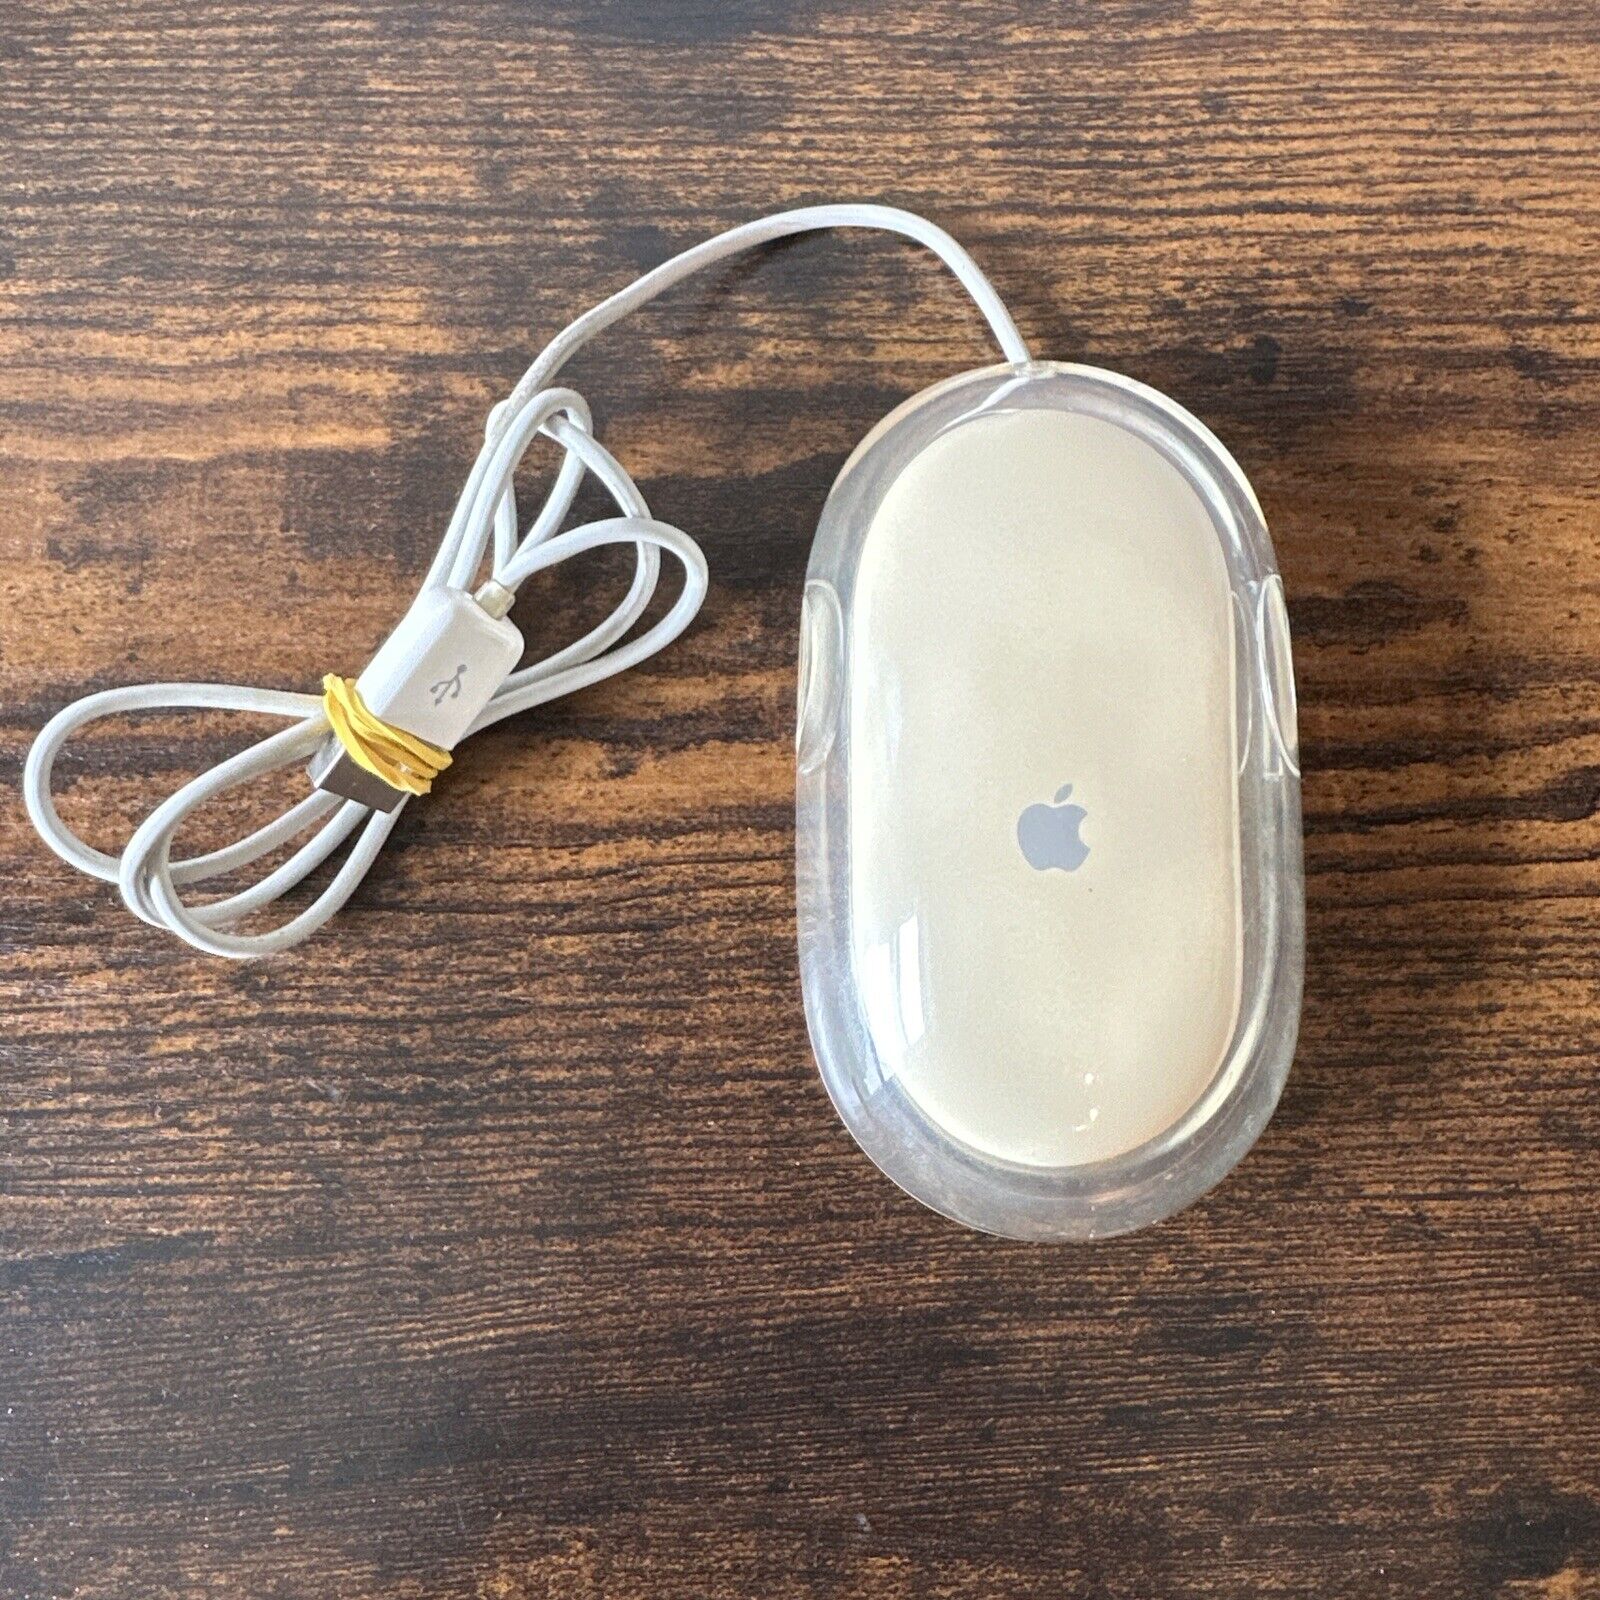 Apple Desktop USB Pro Mouse M5769 White/Clear For iMac Vintage Tested